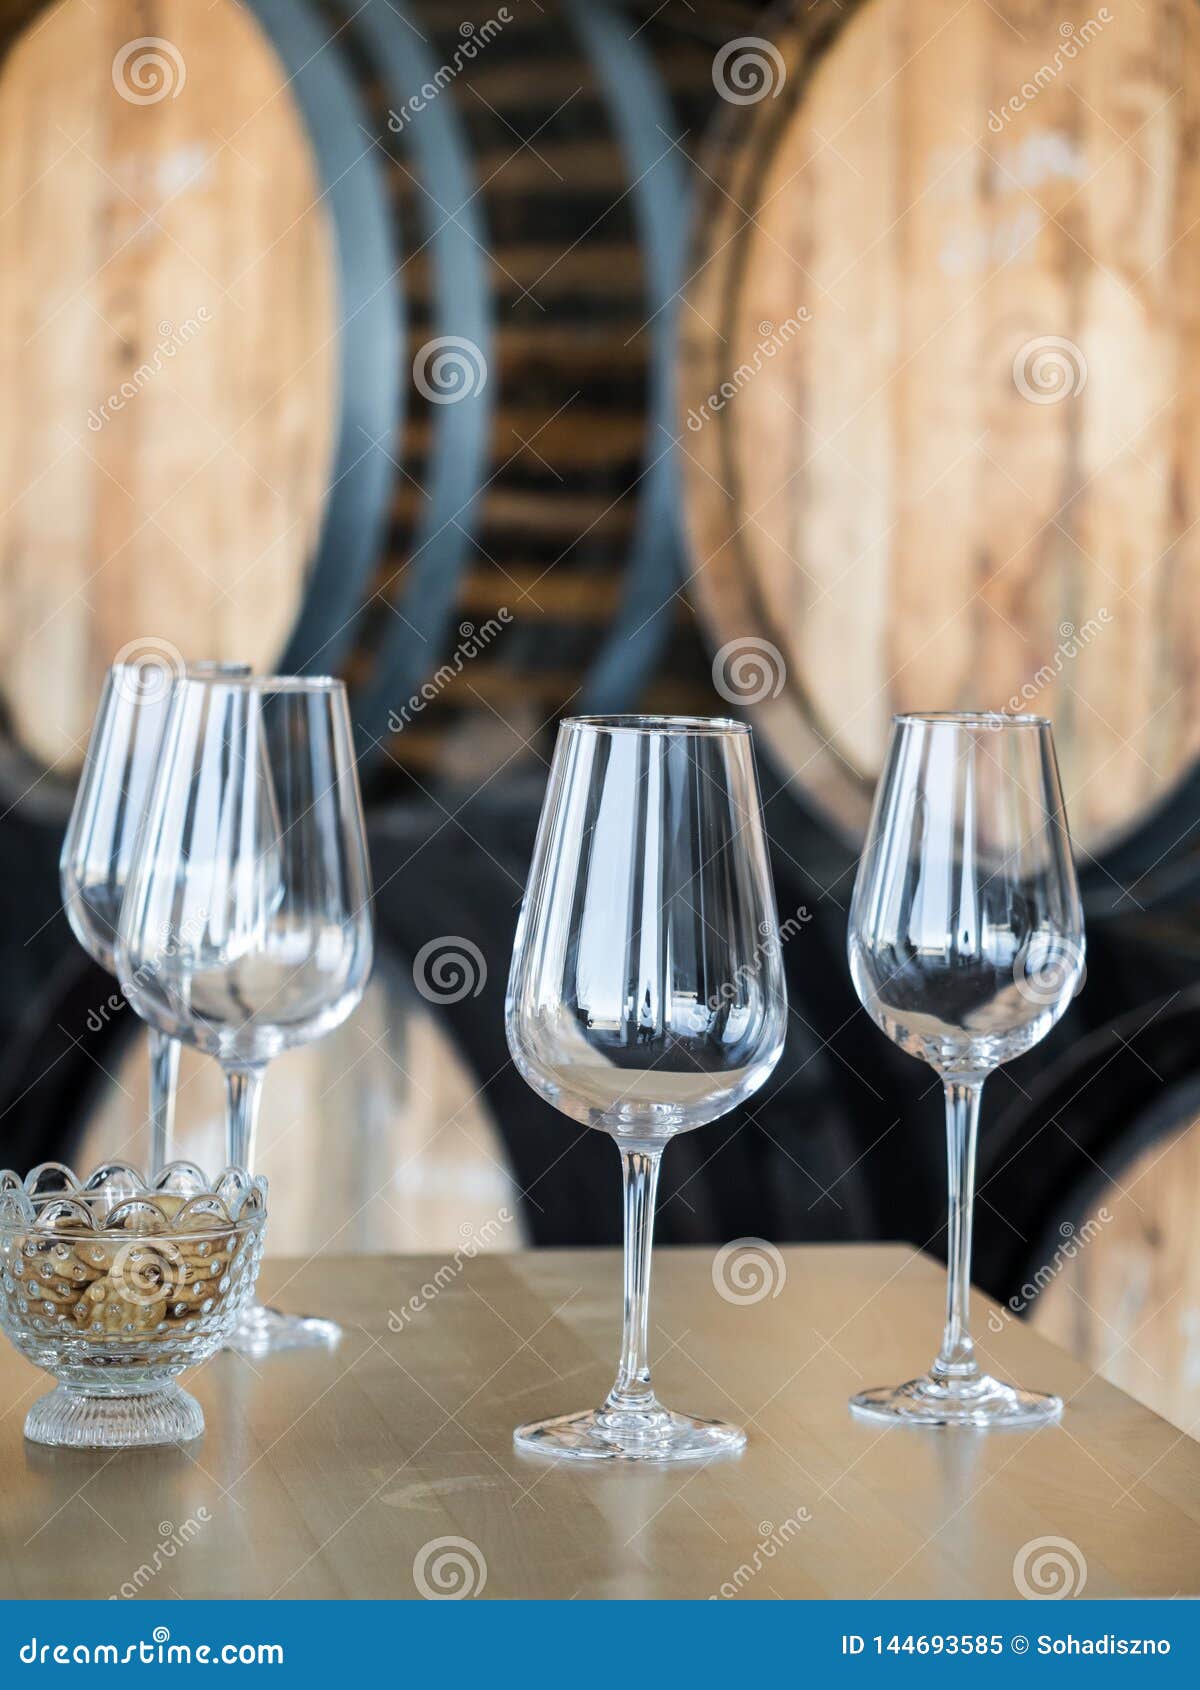 wine glasses in front of wooden wine barrels